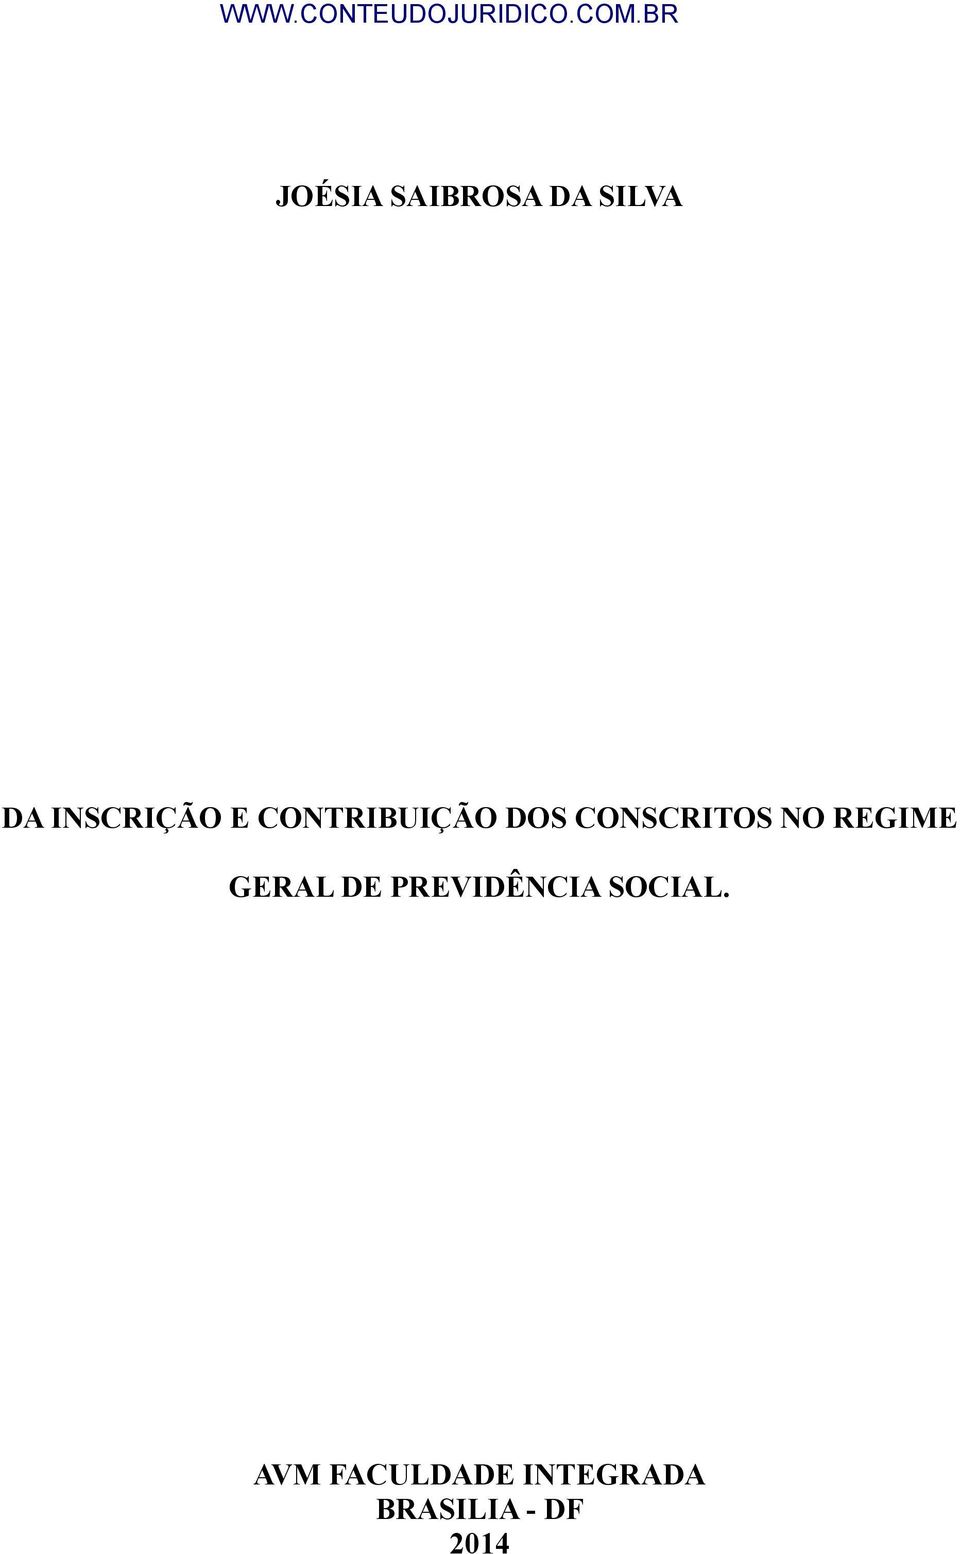 REGIME GERAL DE PREVIDÊNCIA SOCIAL.